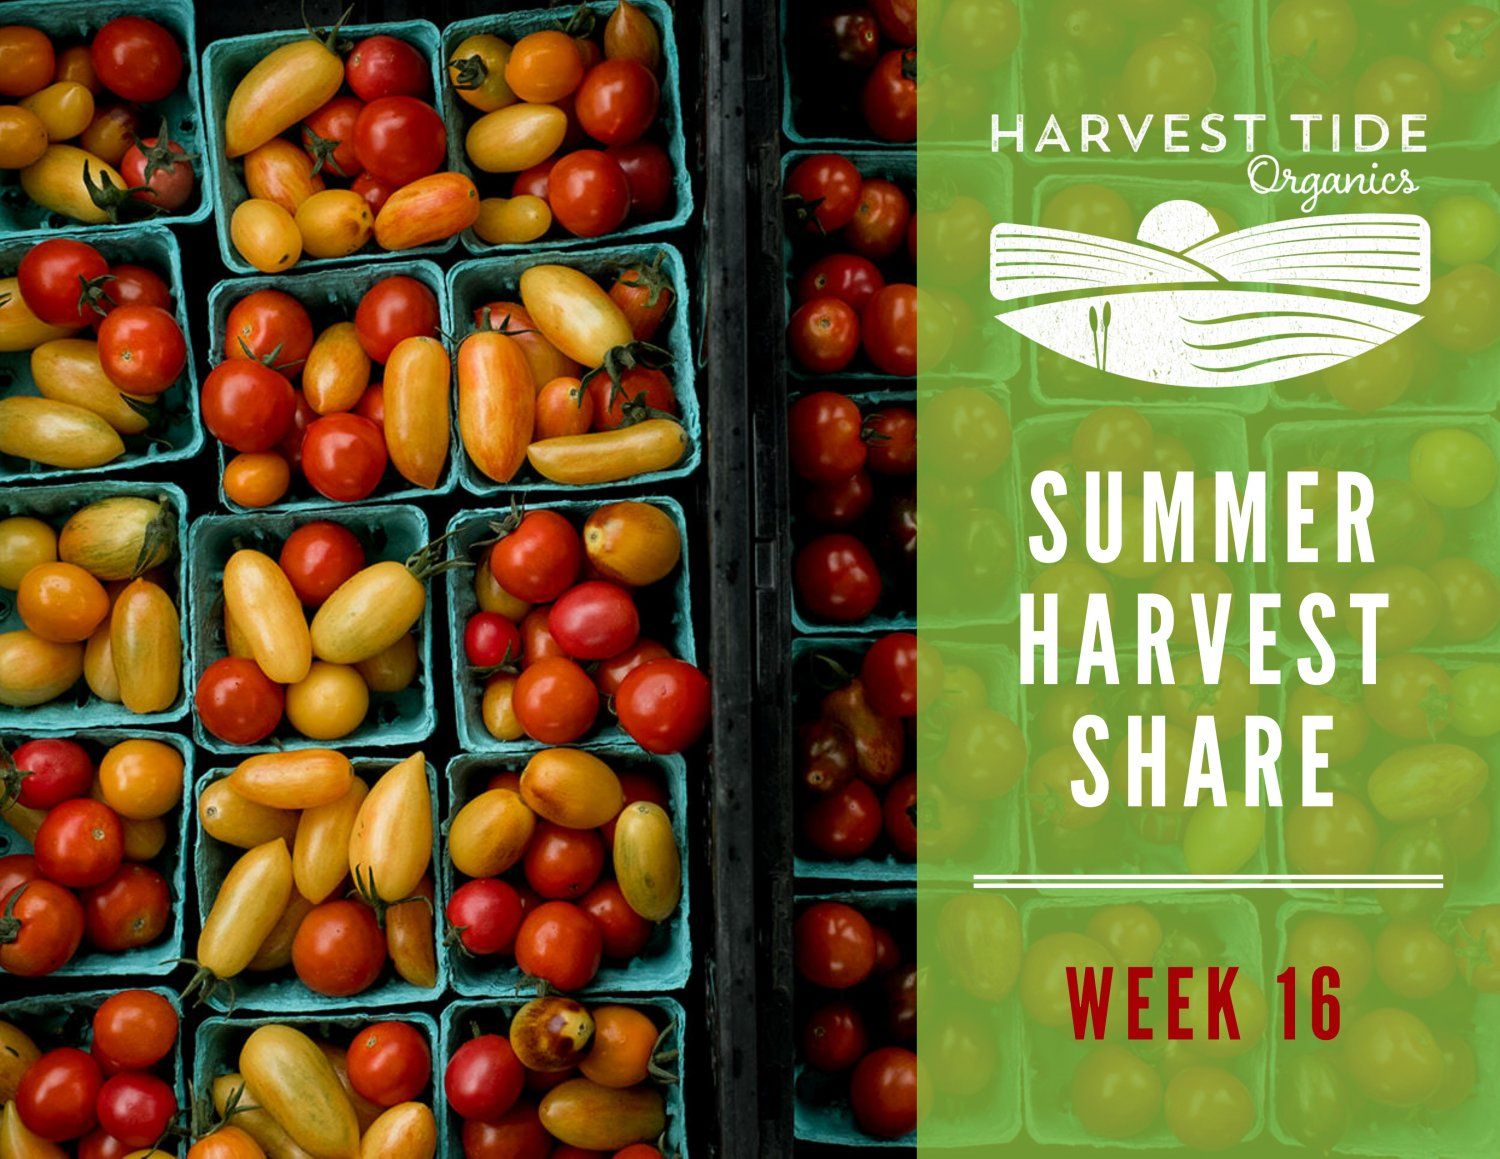 Previous Happening: Summer Harvest Share - Week 16